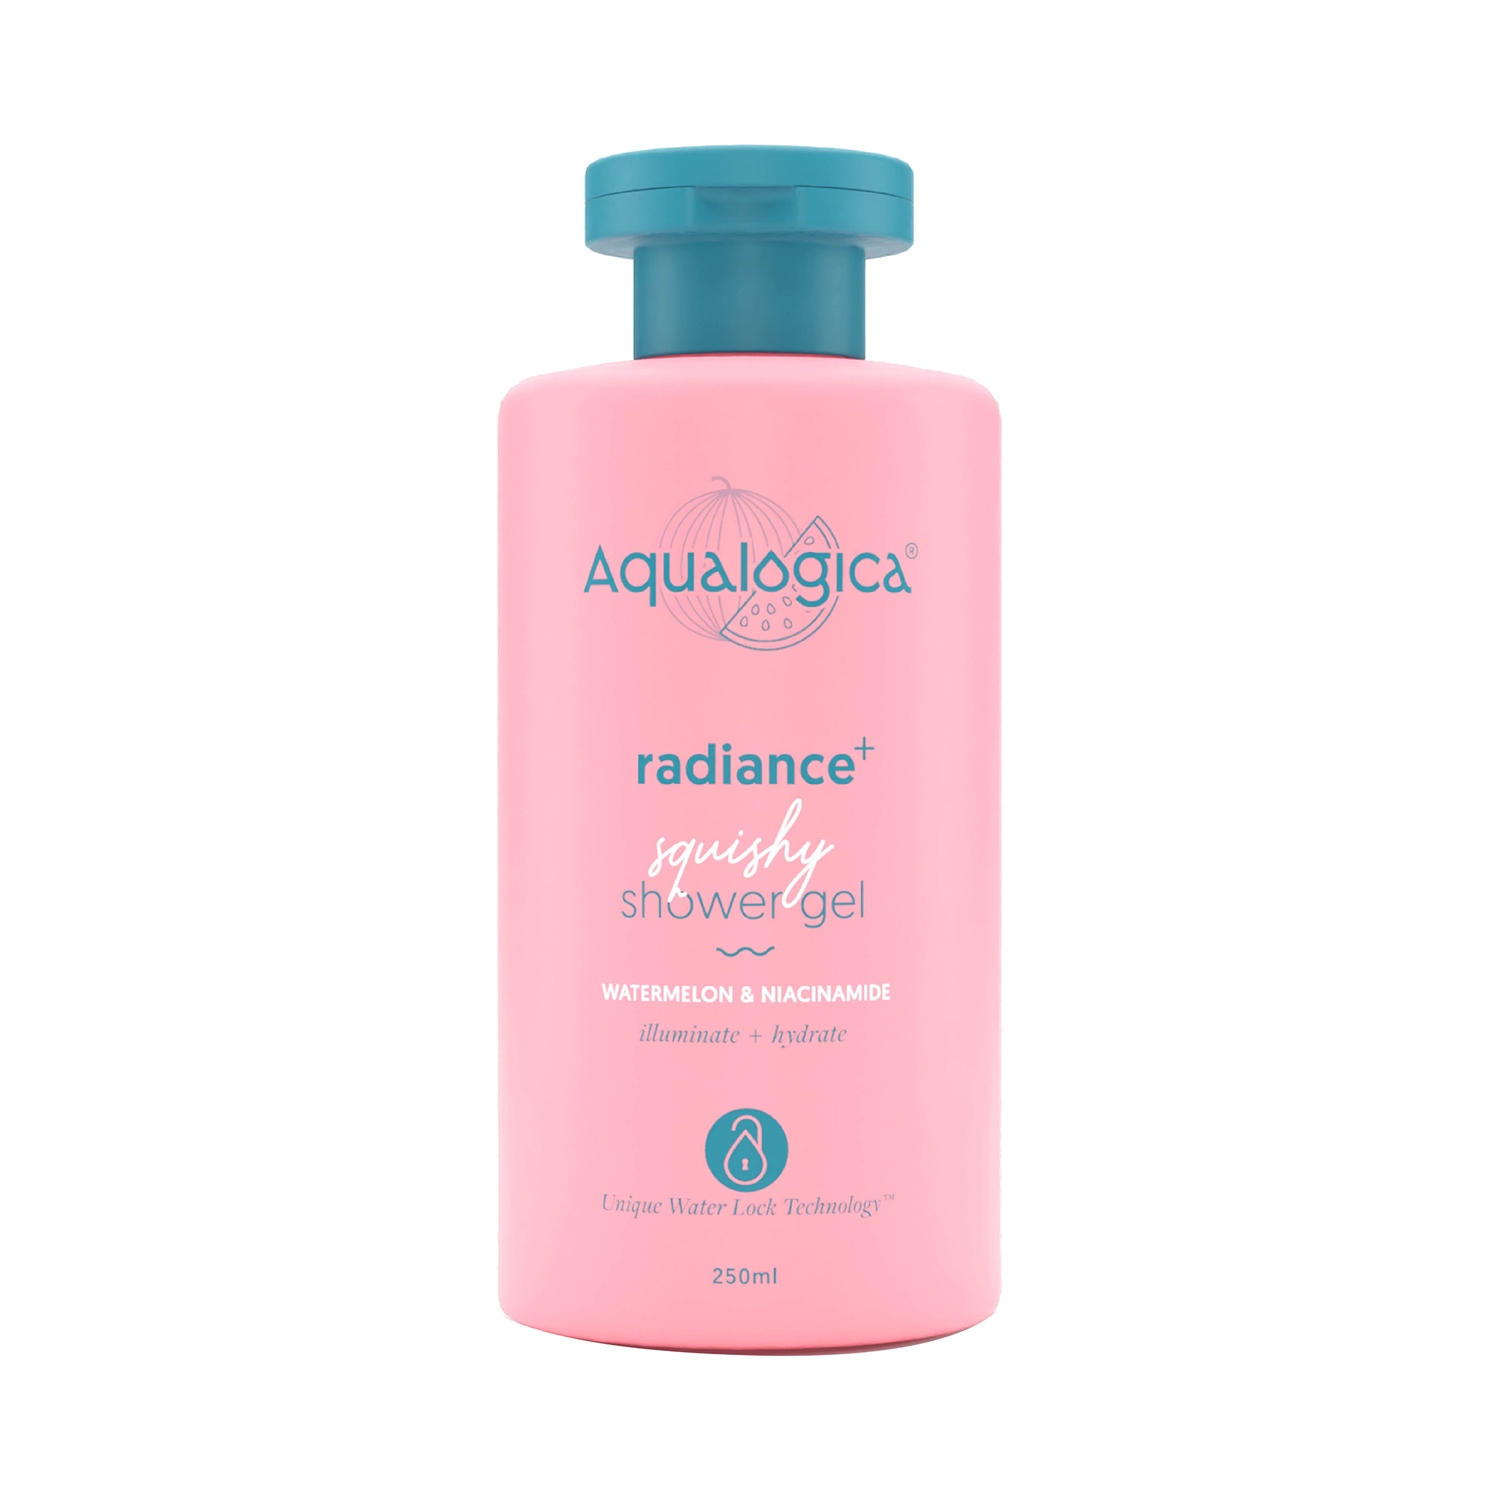 Aqualogica | Aqualogica Radiance+ Squishy Shower Gel With Watermelon & Niacinamide (250ml)